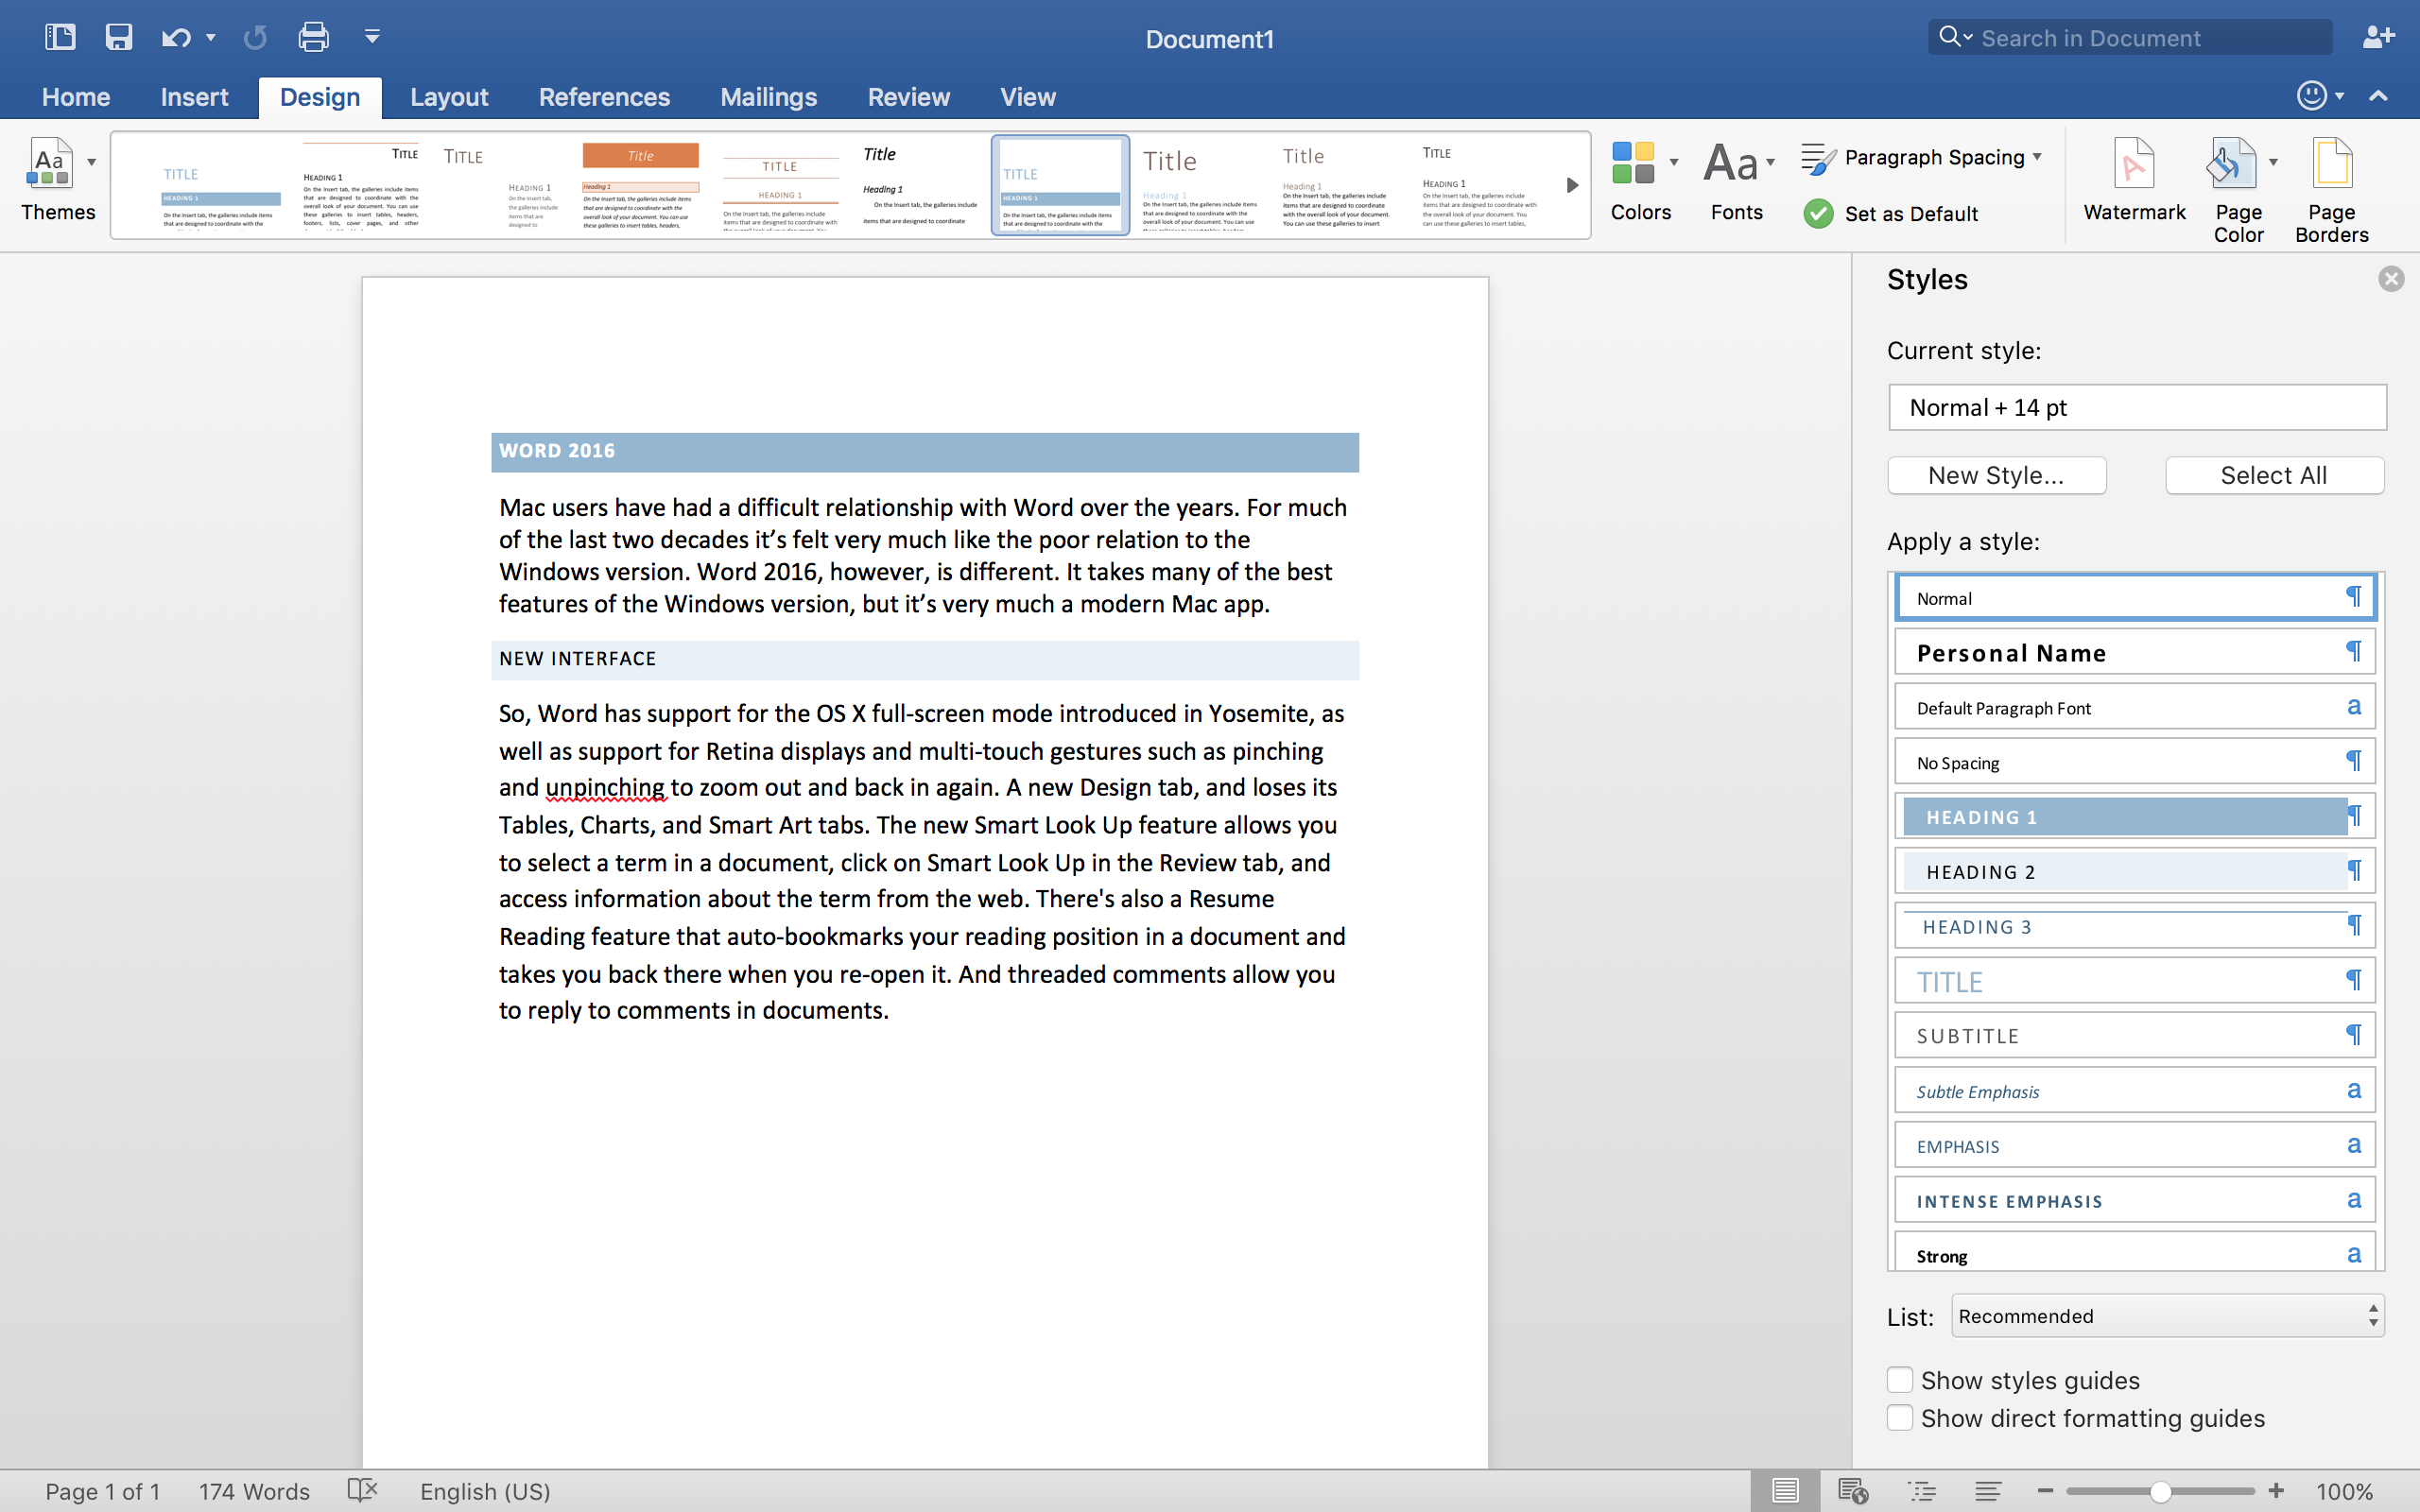 highlight text microsoft powerpoint mac 2011